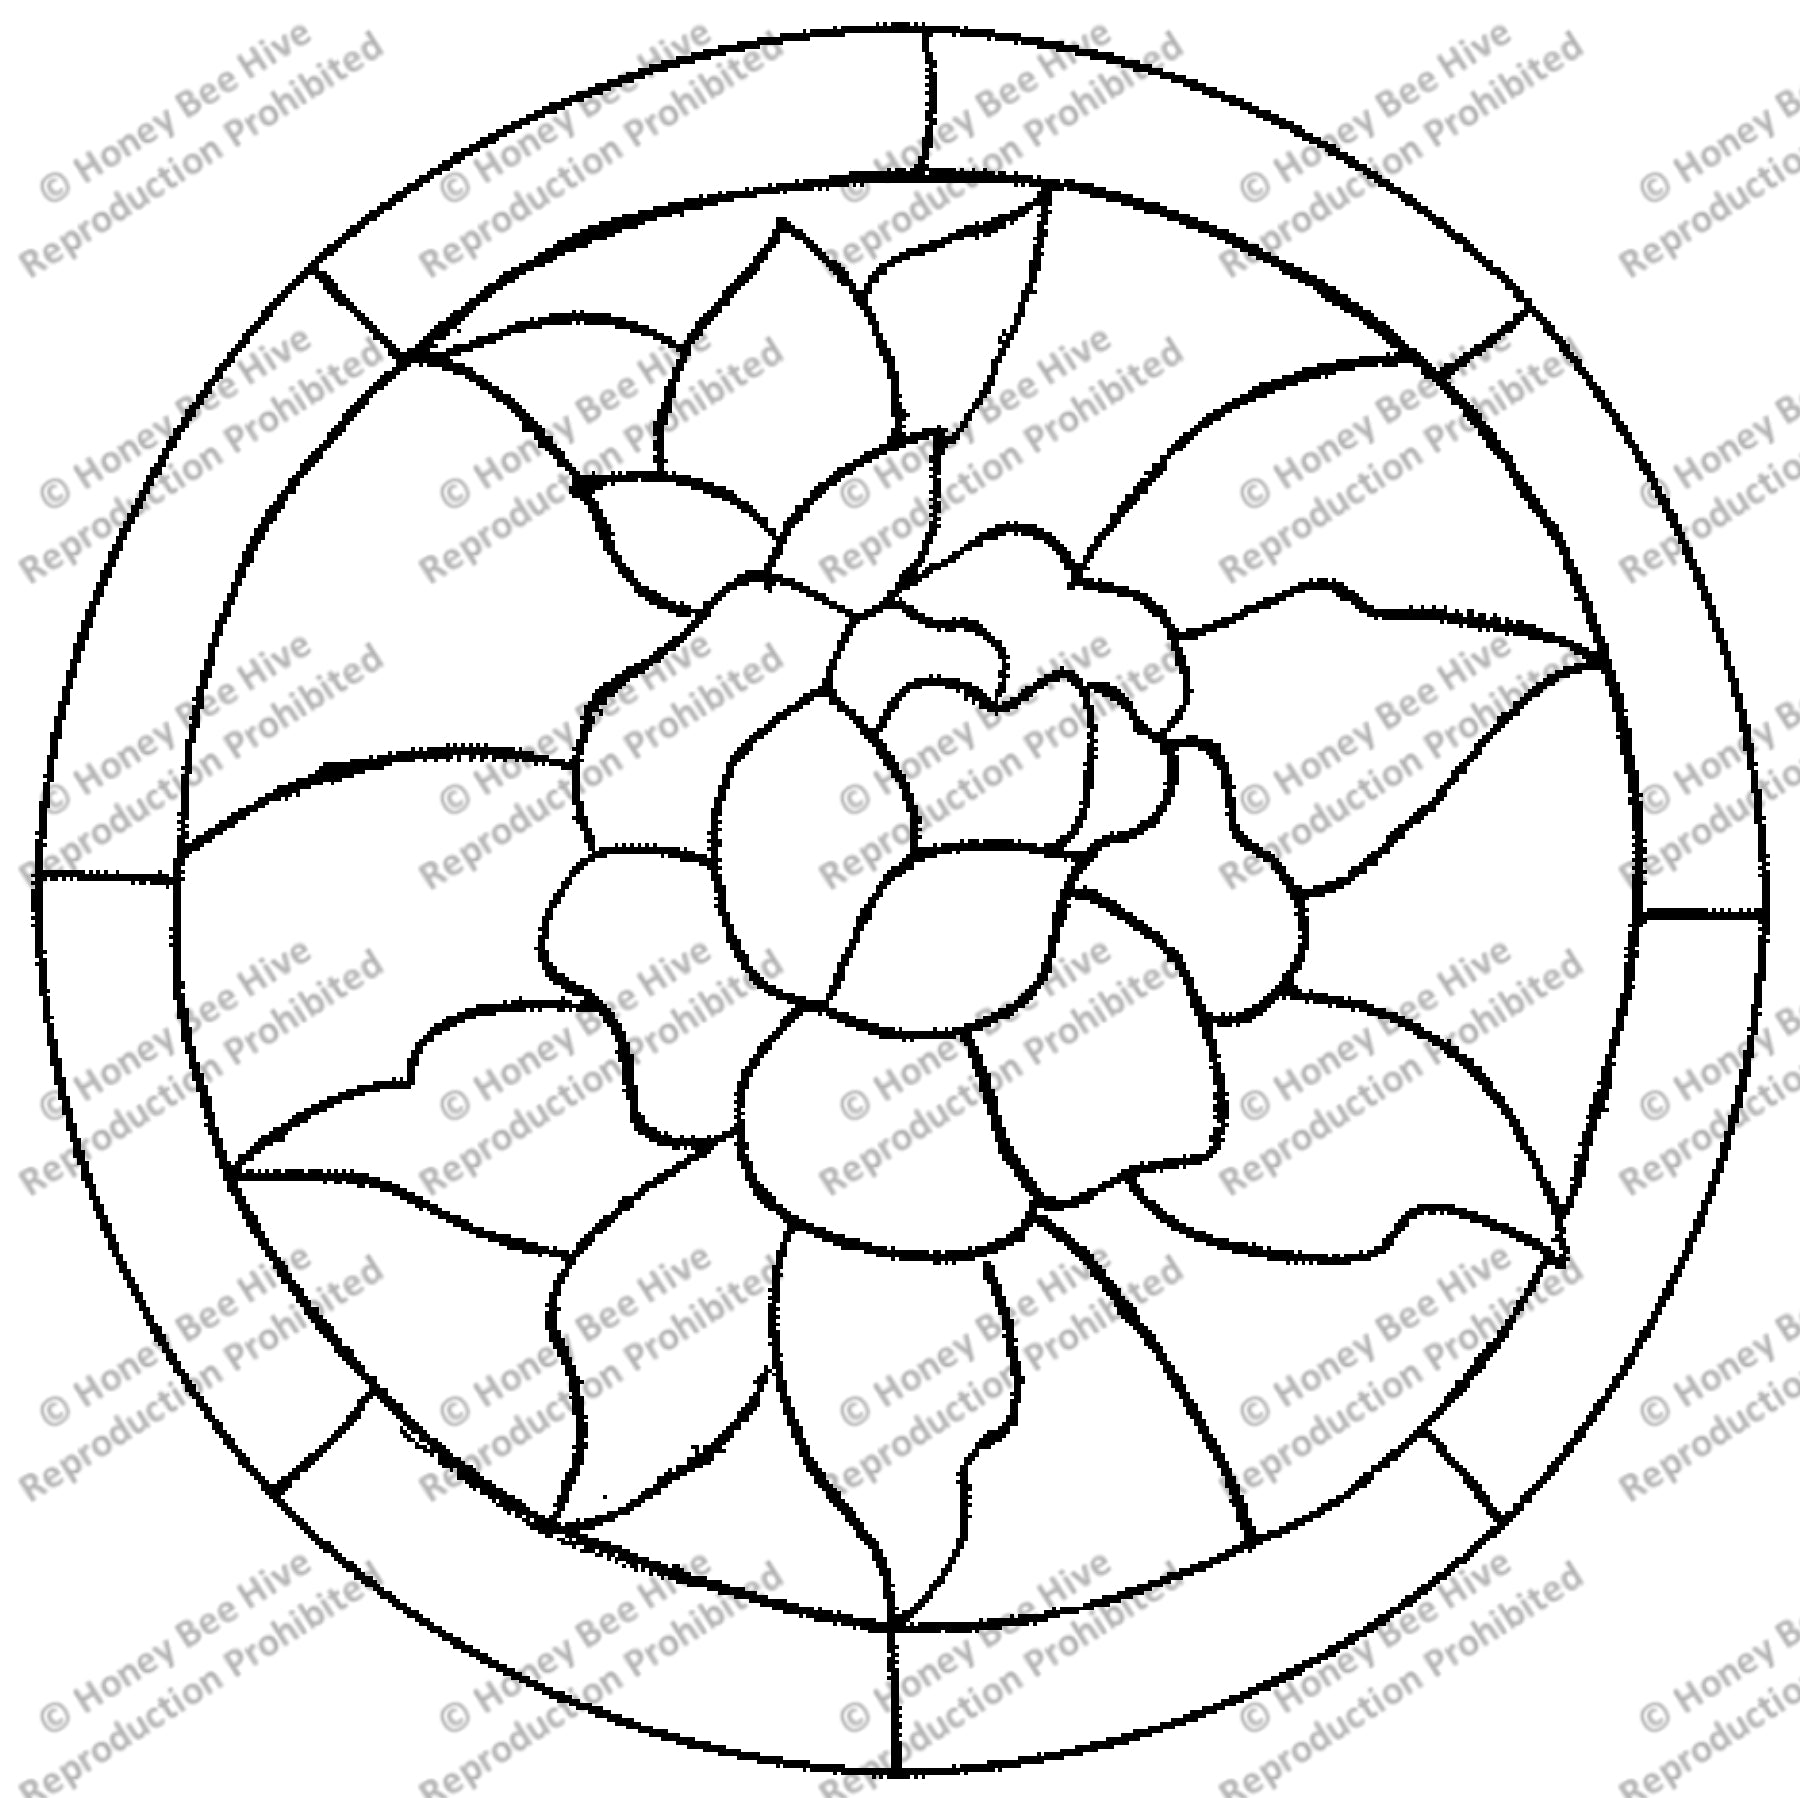 Glass Rose, rug hooking pattern